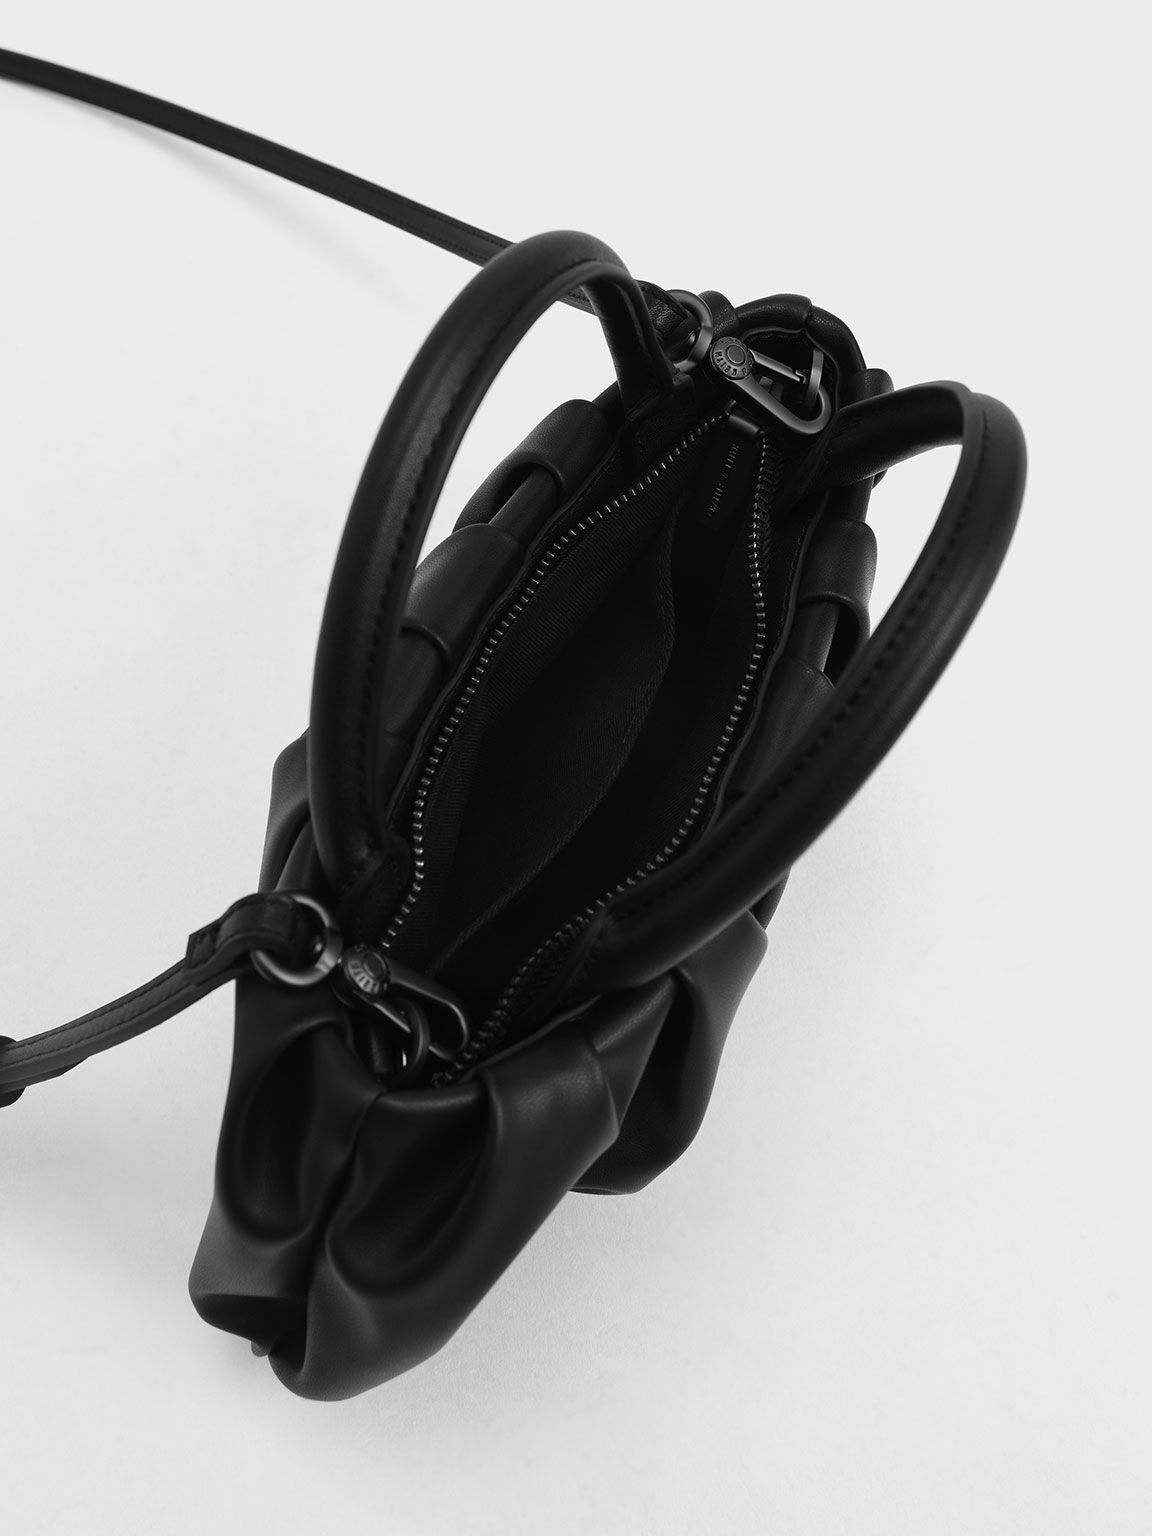 Holiday 2021 Collection: Claudette Ruched Top Handle Bag​, Black, hi-res